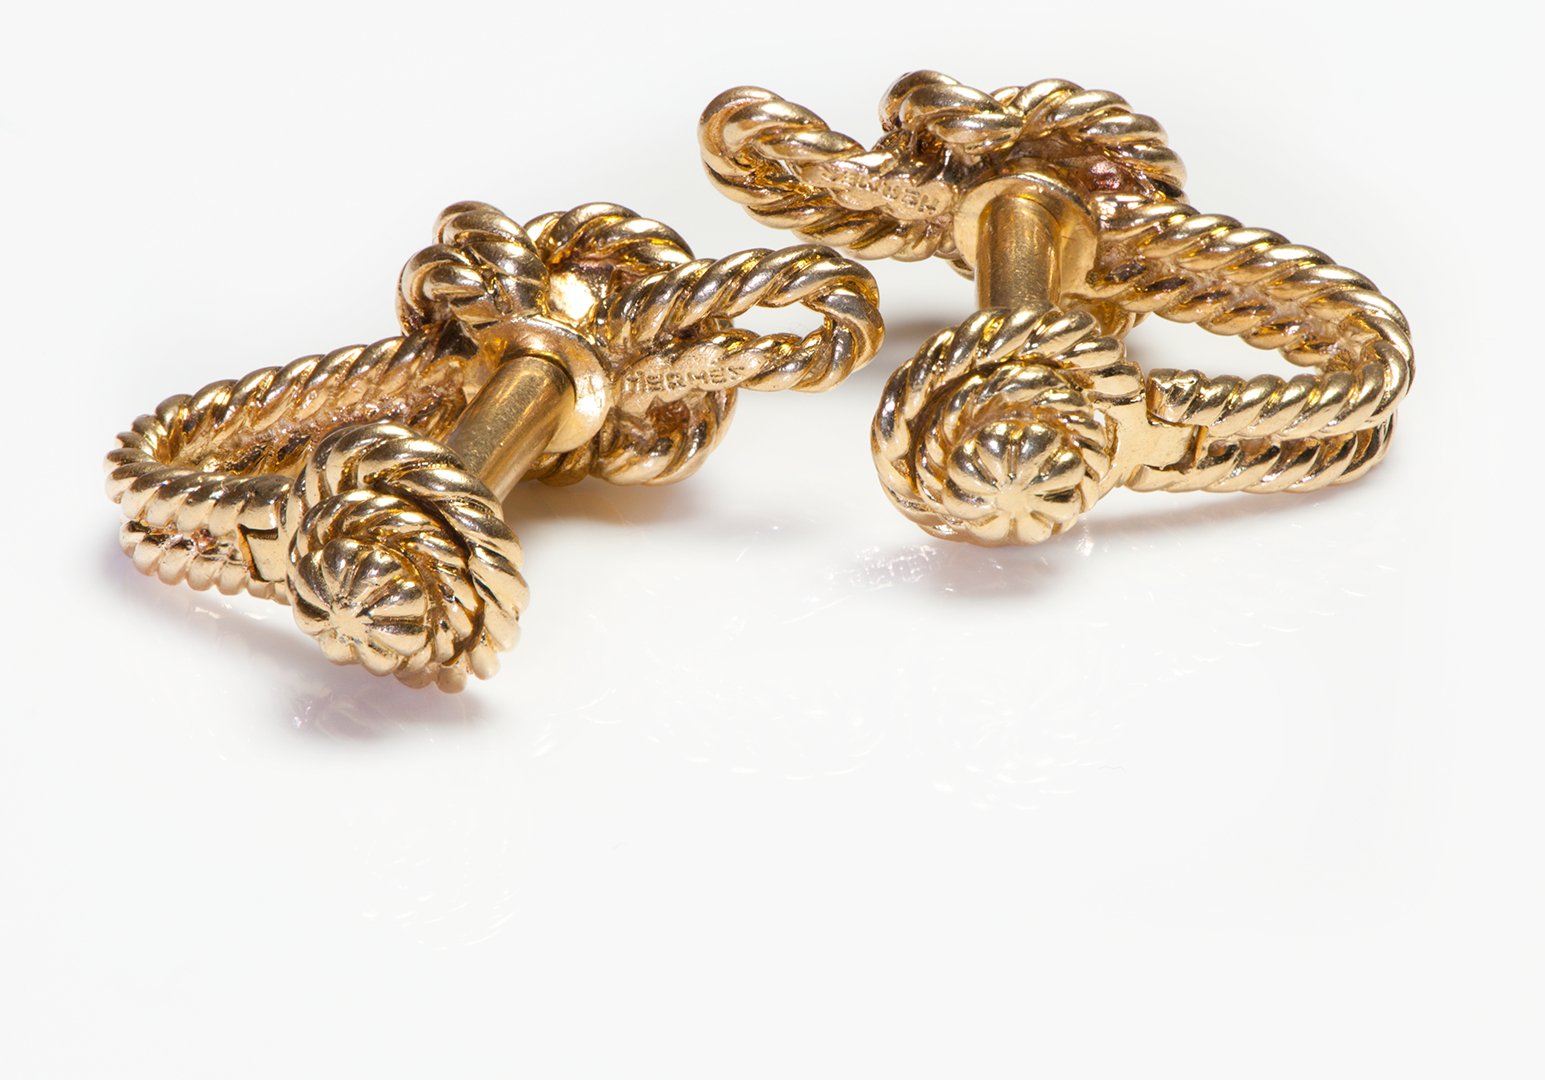 Hermes 18K Gold Rope Twist Cufflinks